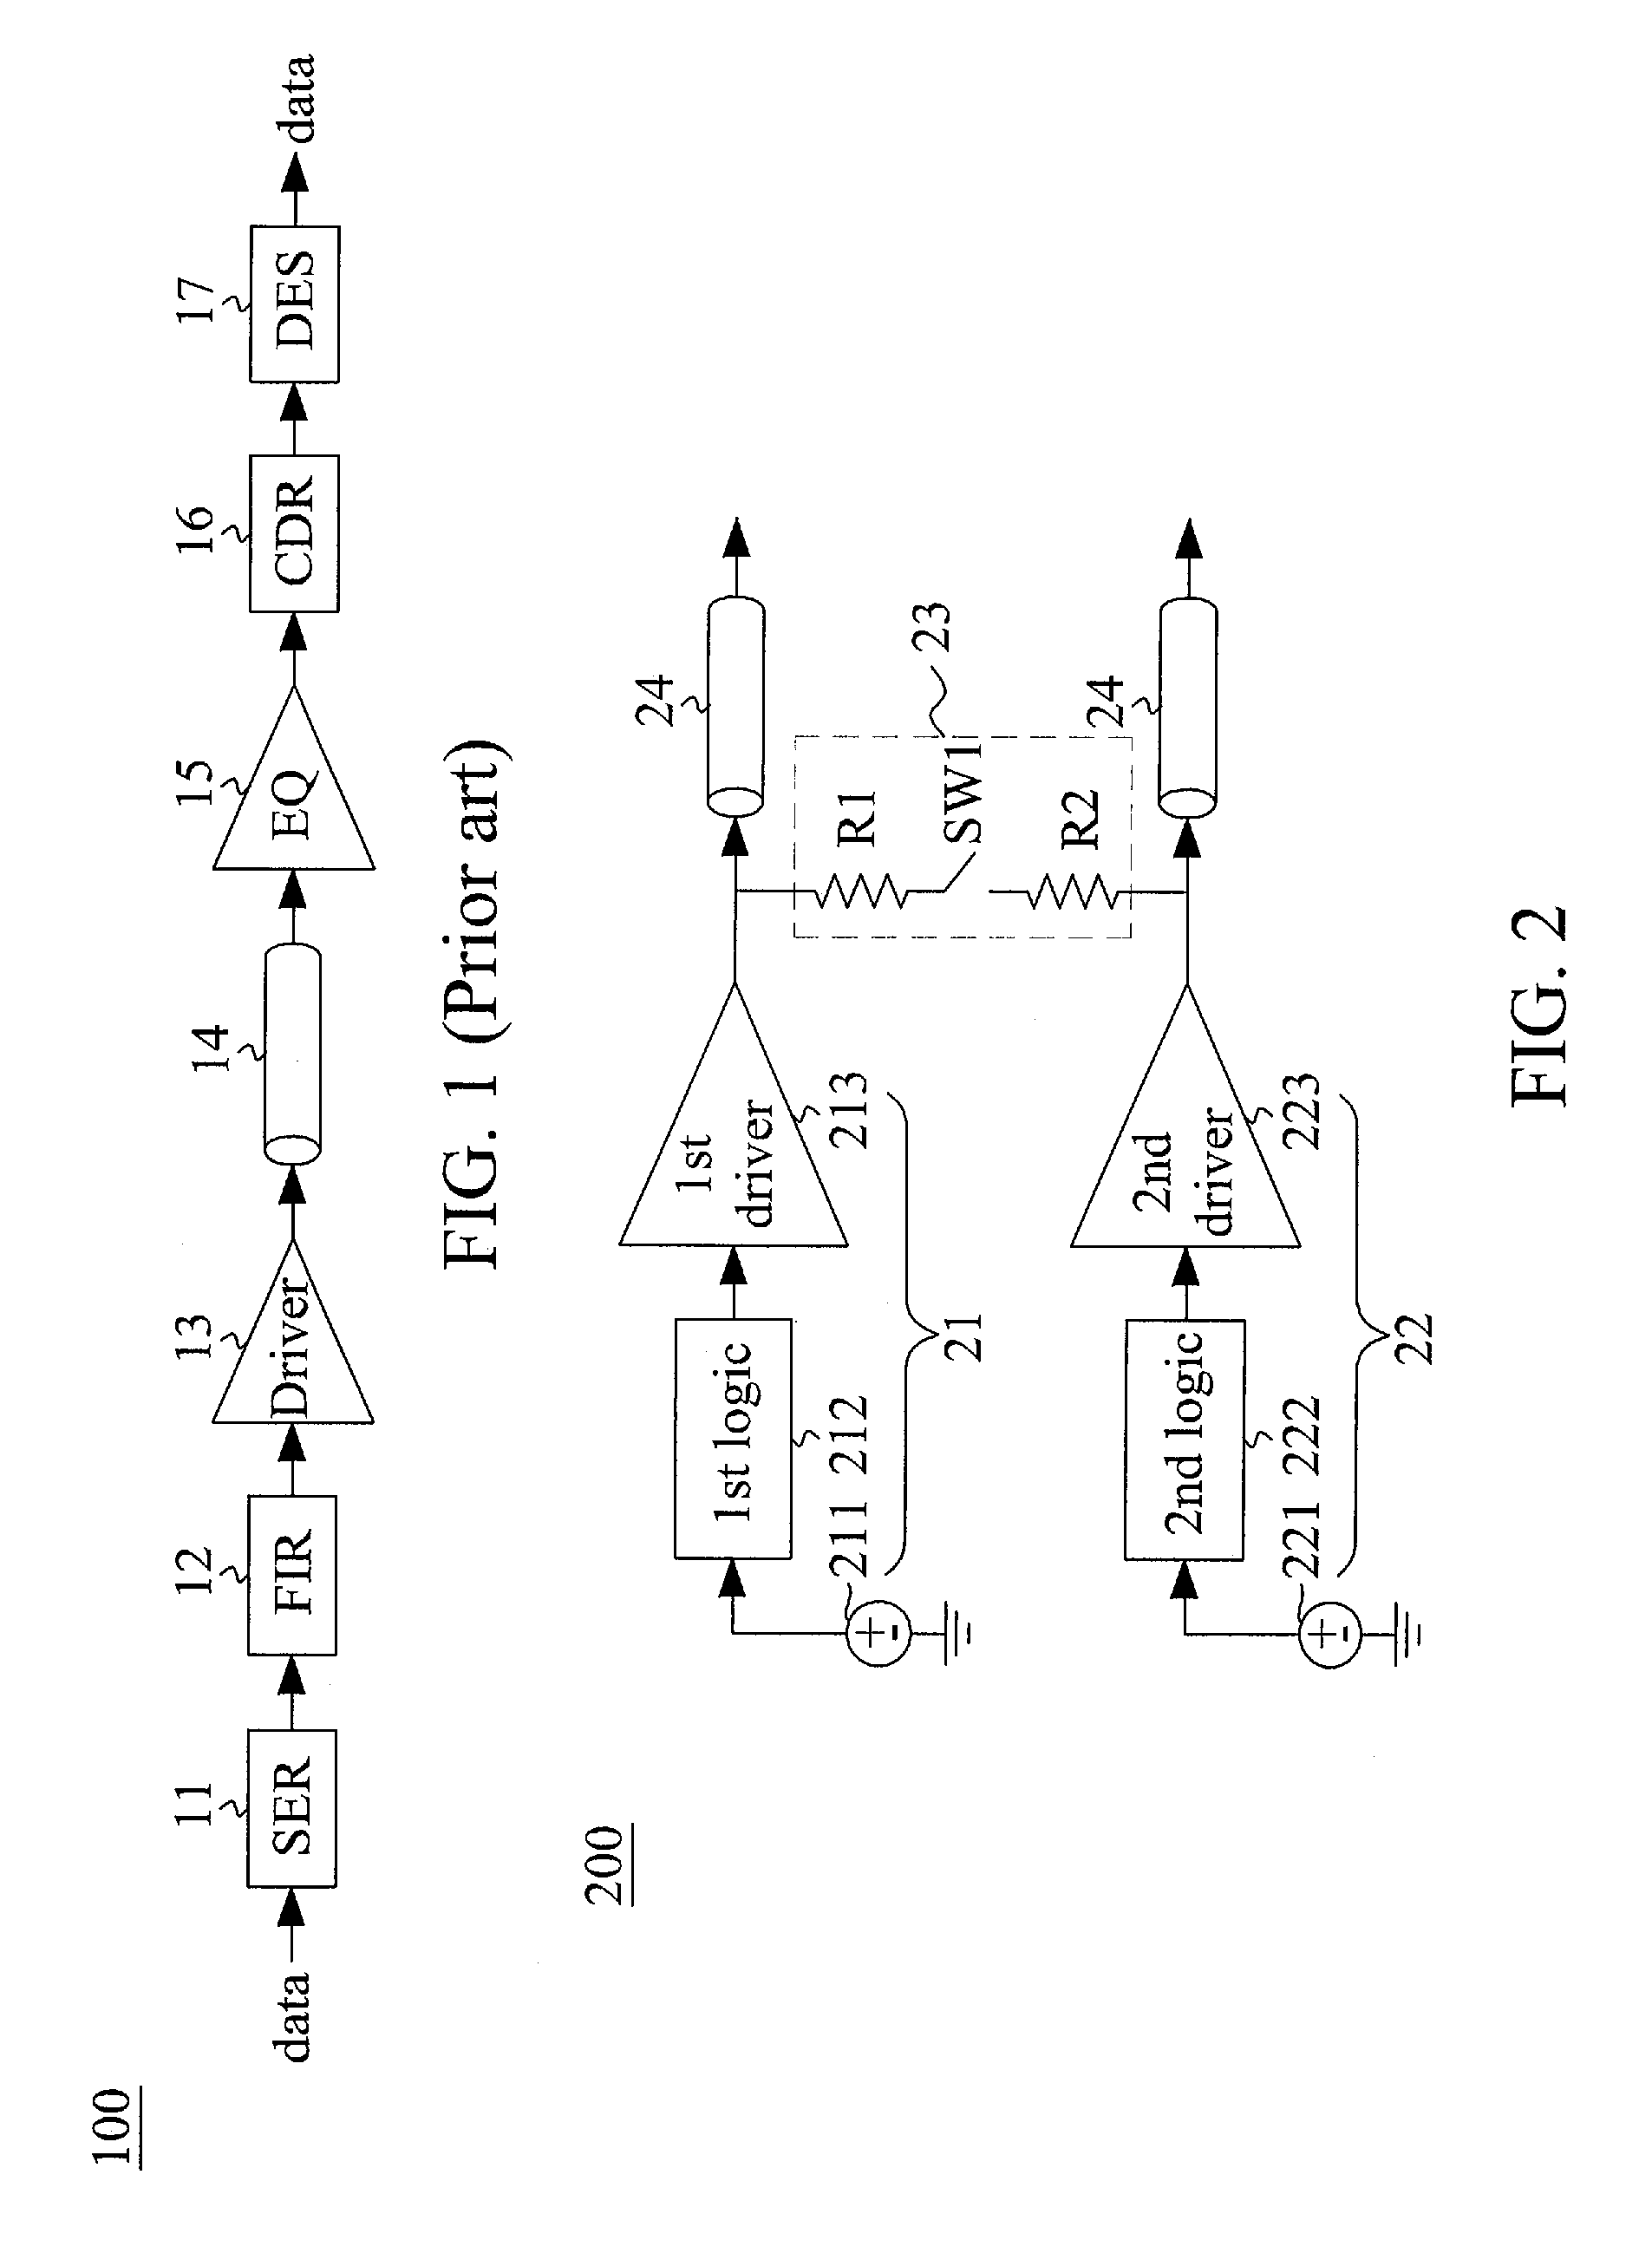 Duobinary voltage-mode transmitter